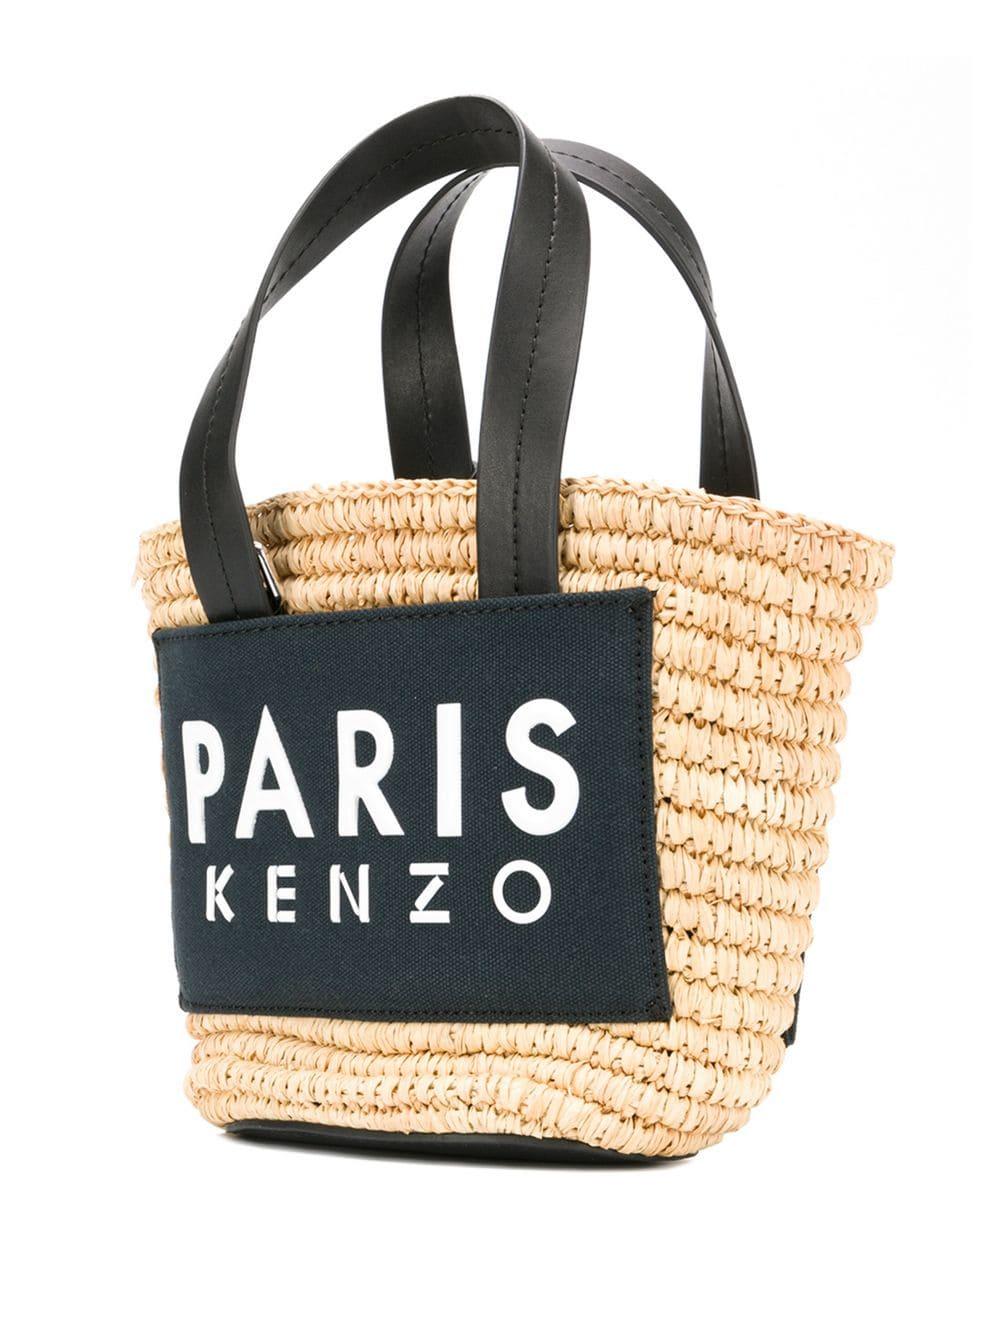 kenzo beach bag